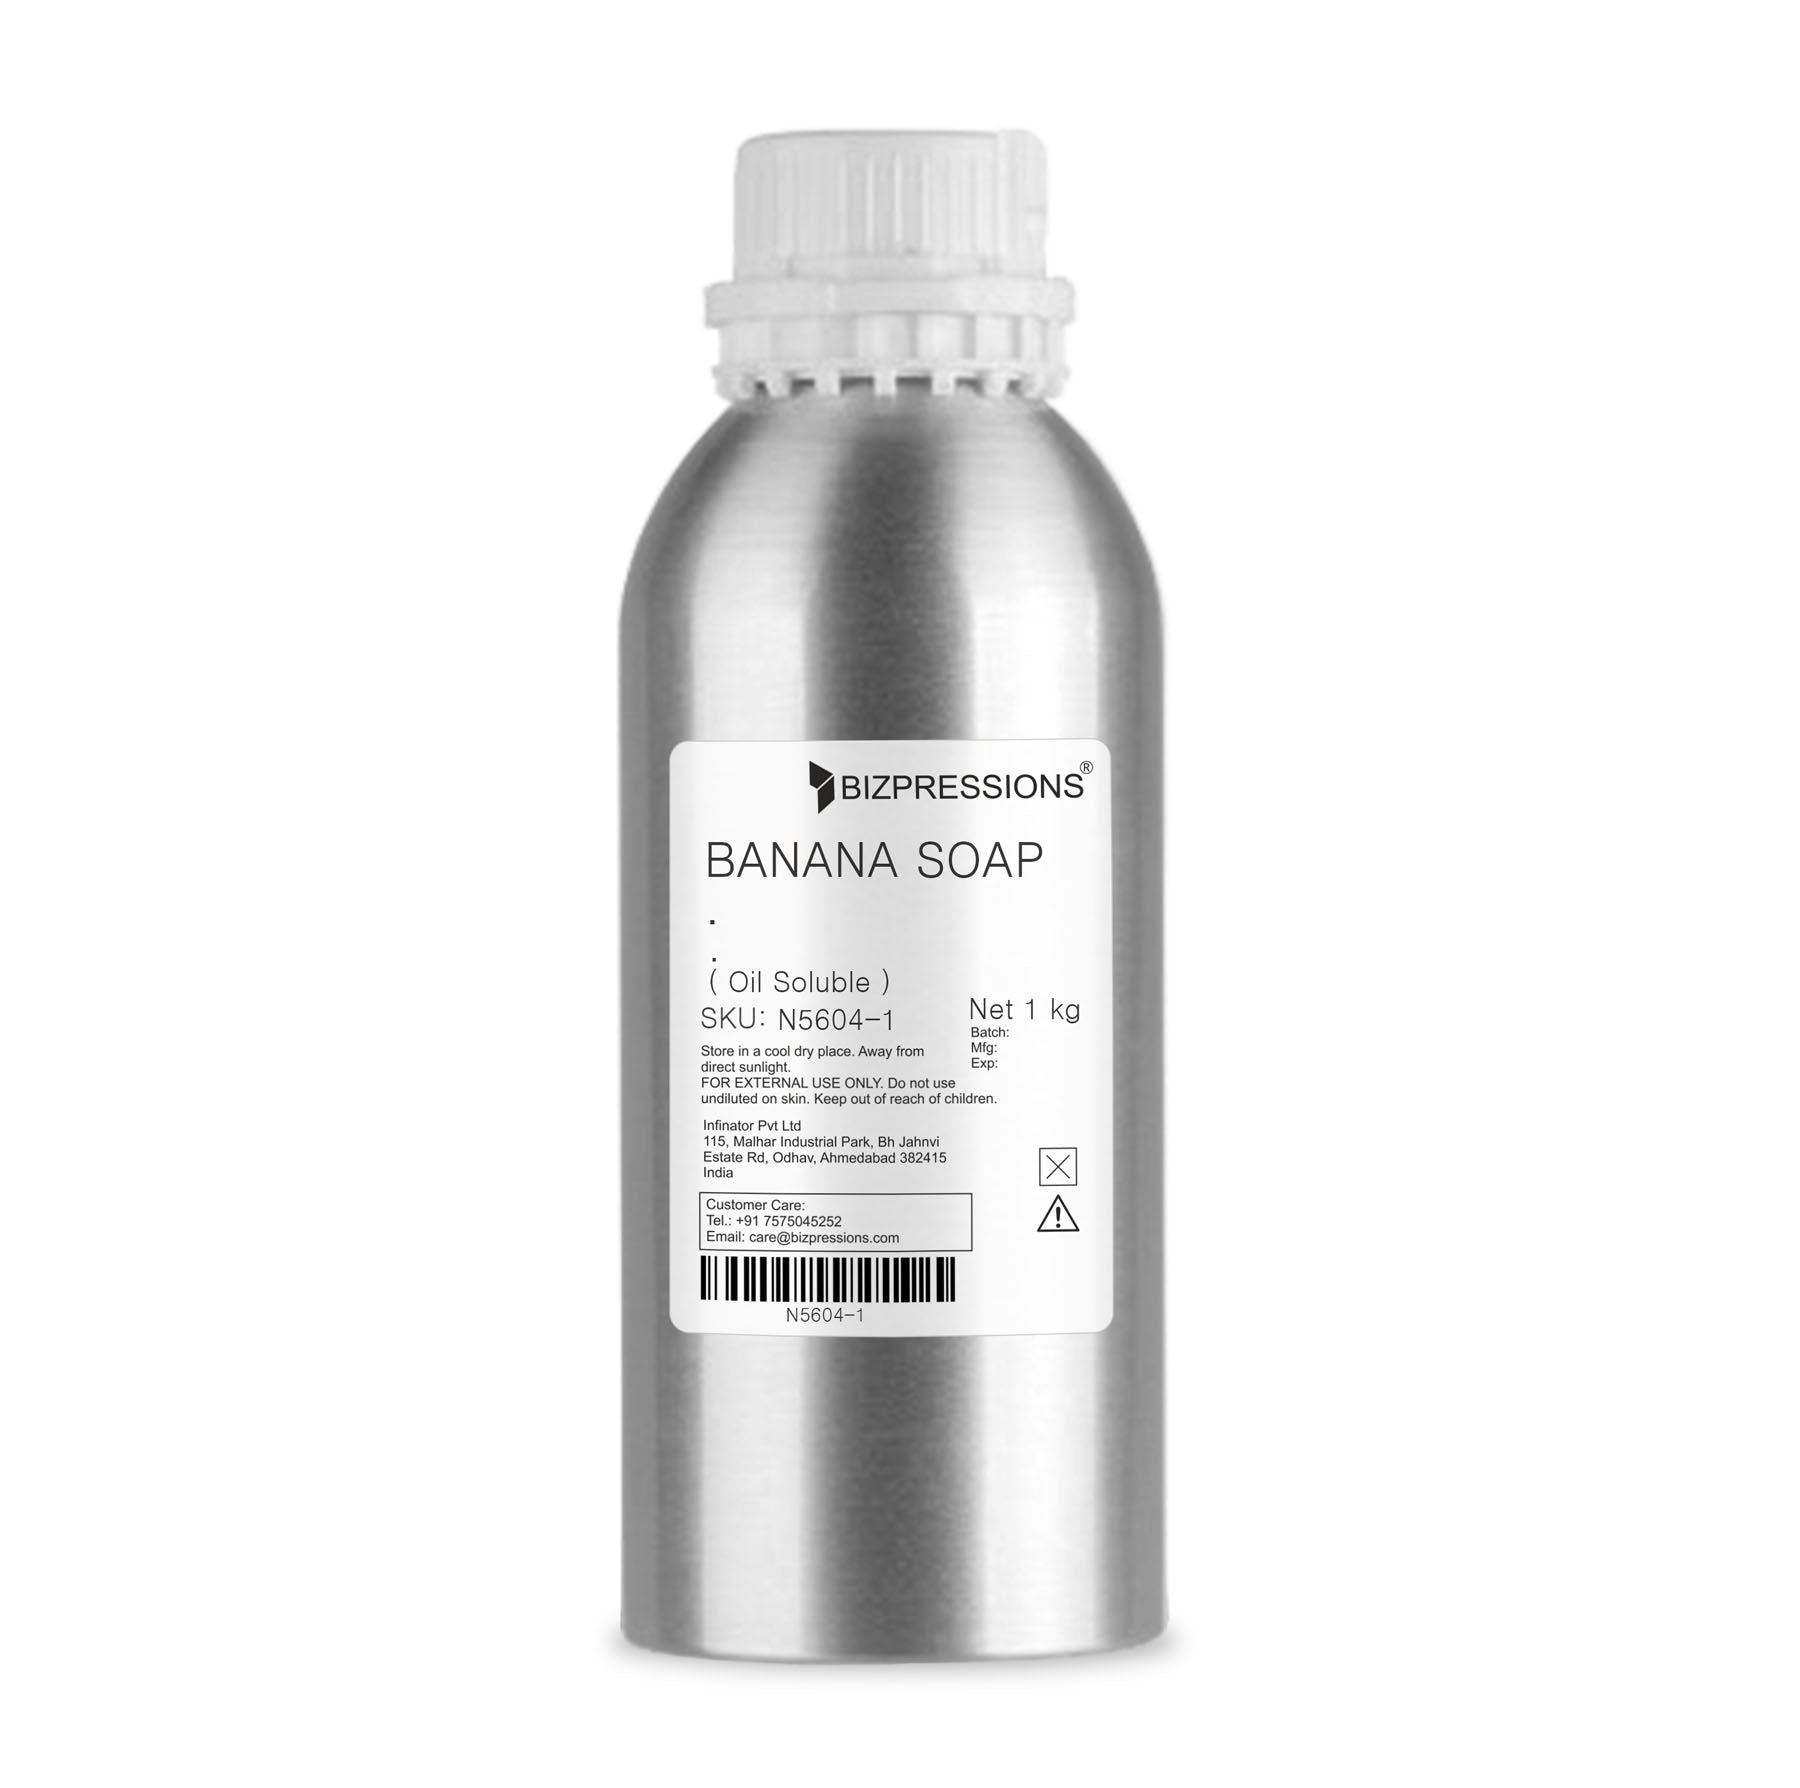 BANANA SOAP - Fragrance ( Oil Soluble ) - 1 kg